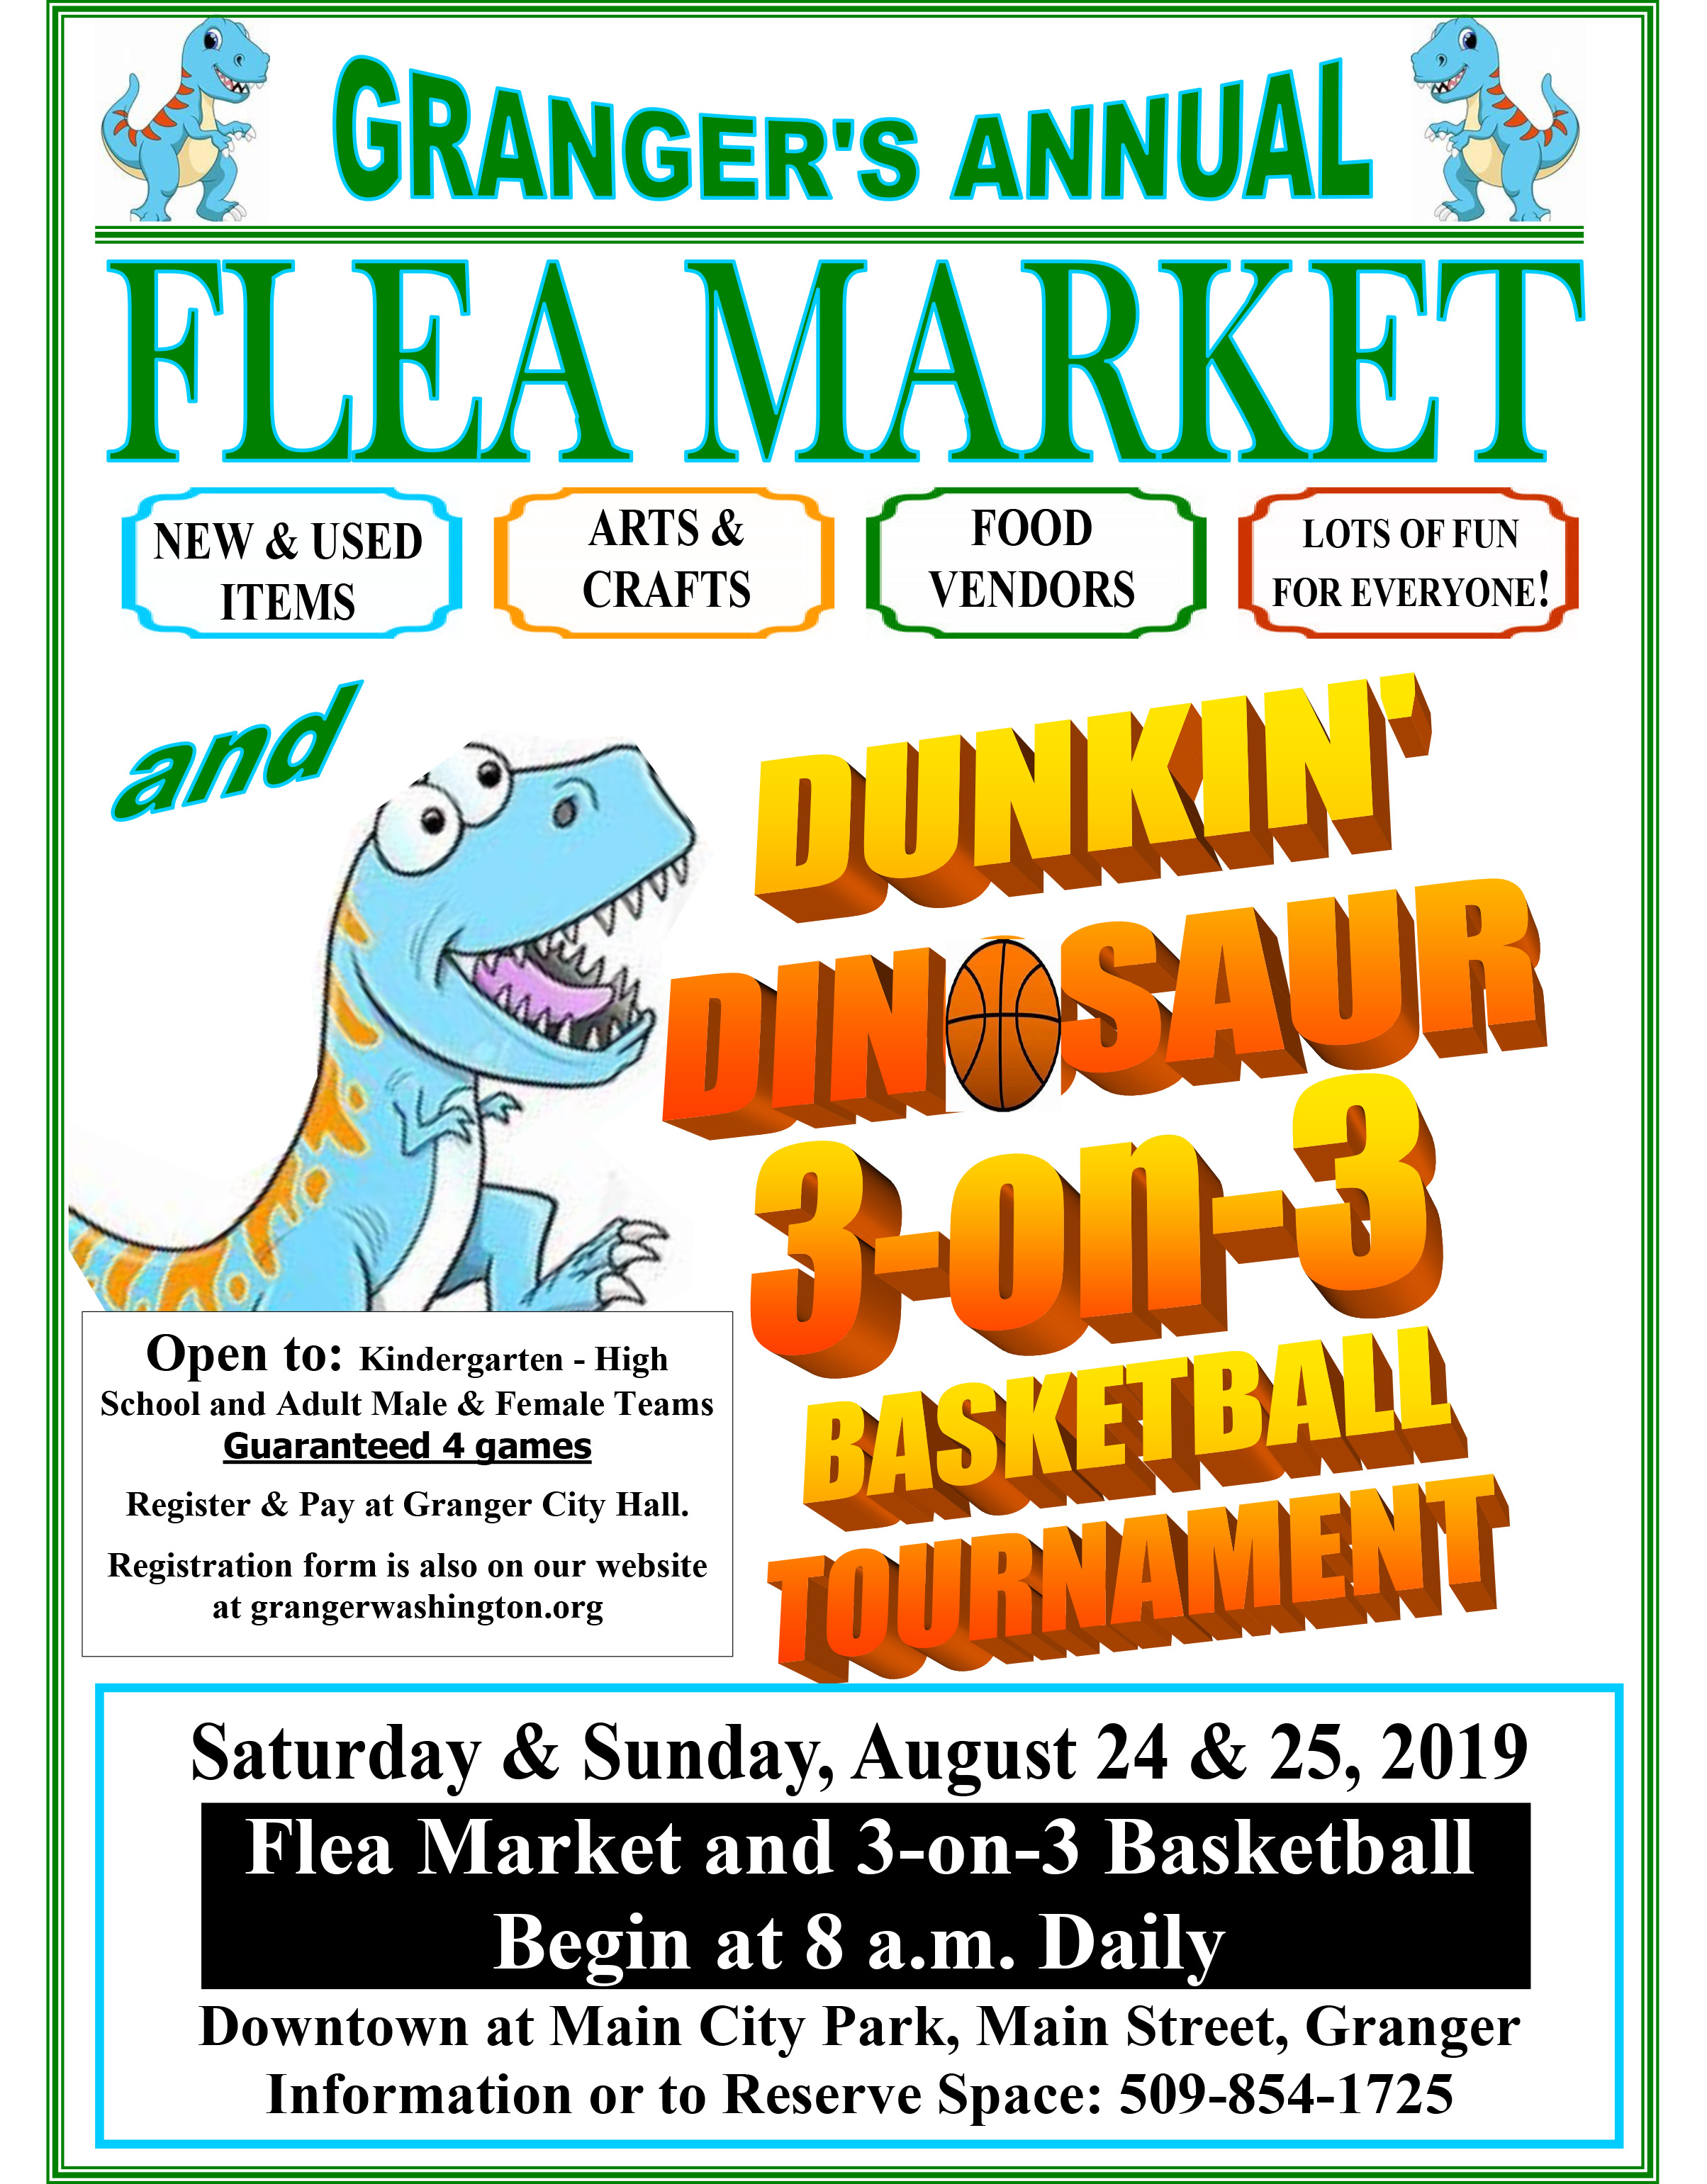 2019 Flea Market Flyer Image City of Granger Washington